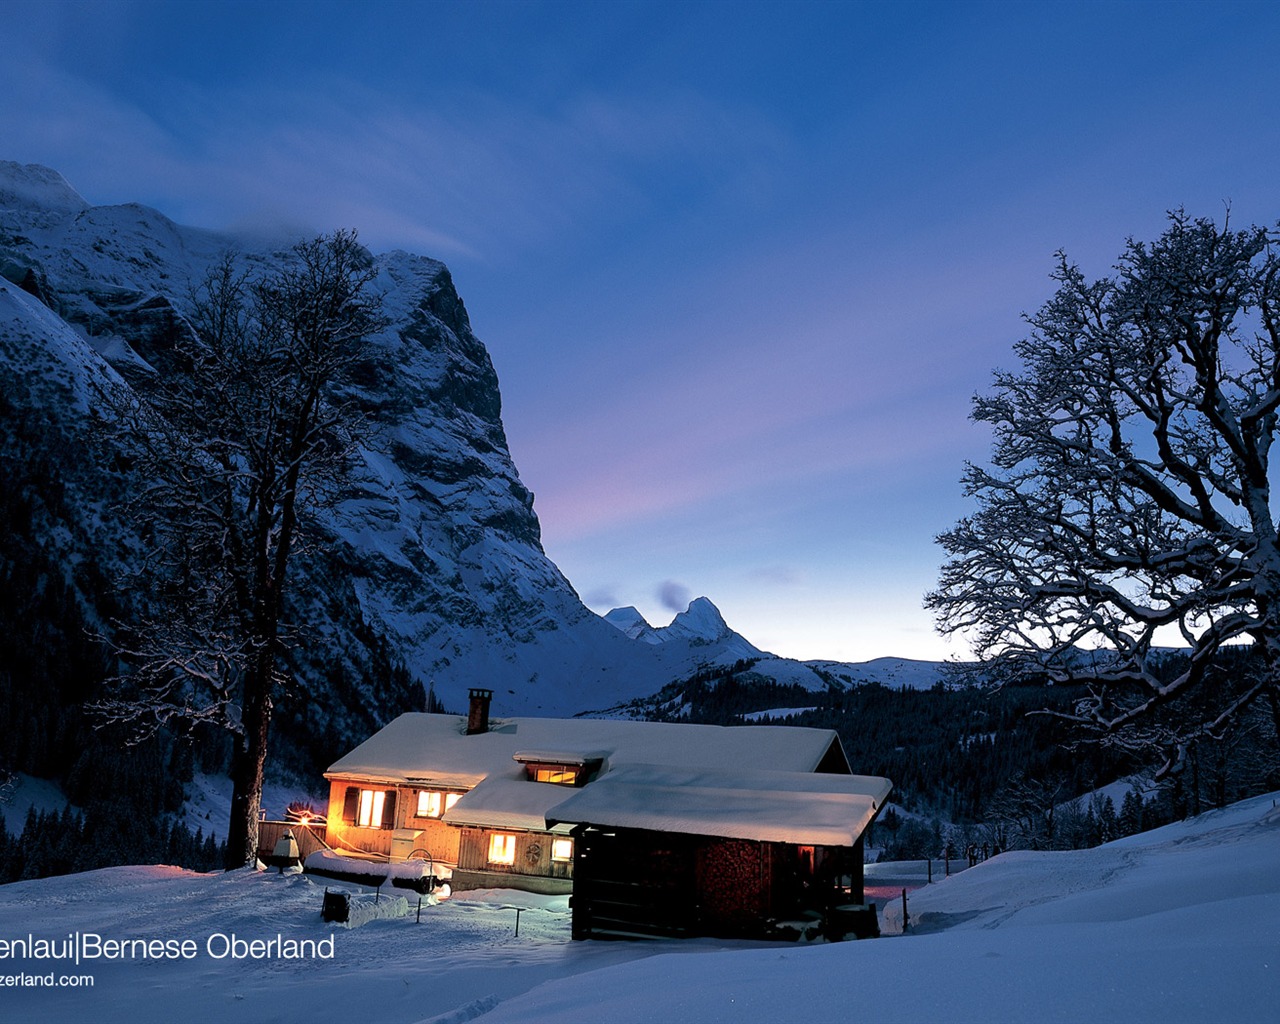 Swiss fond d'écran de neige en hiver #19 - 1280x1024